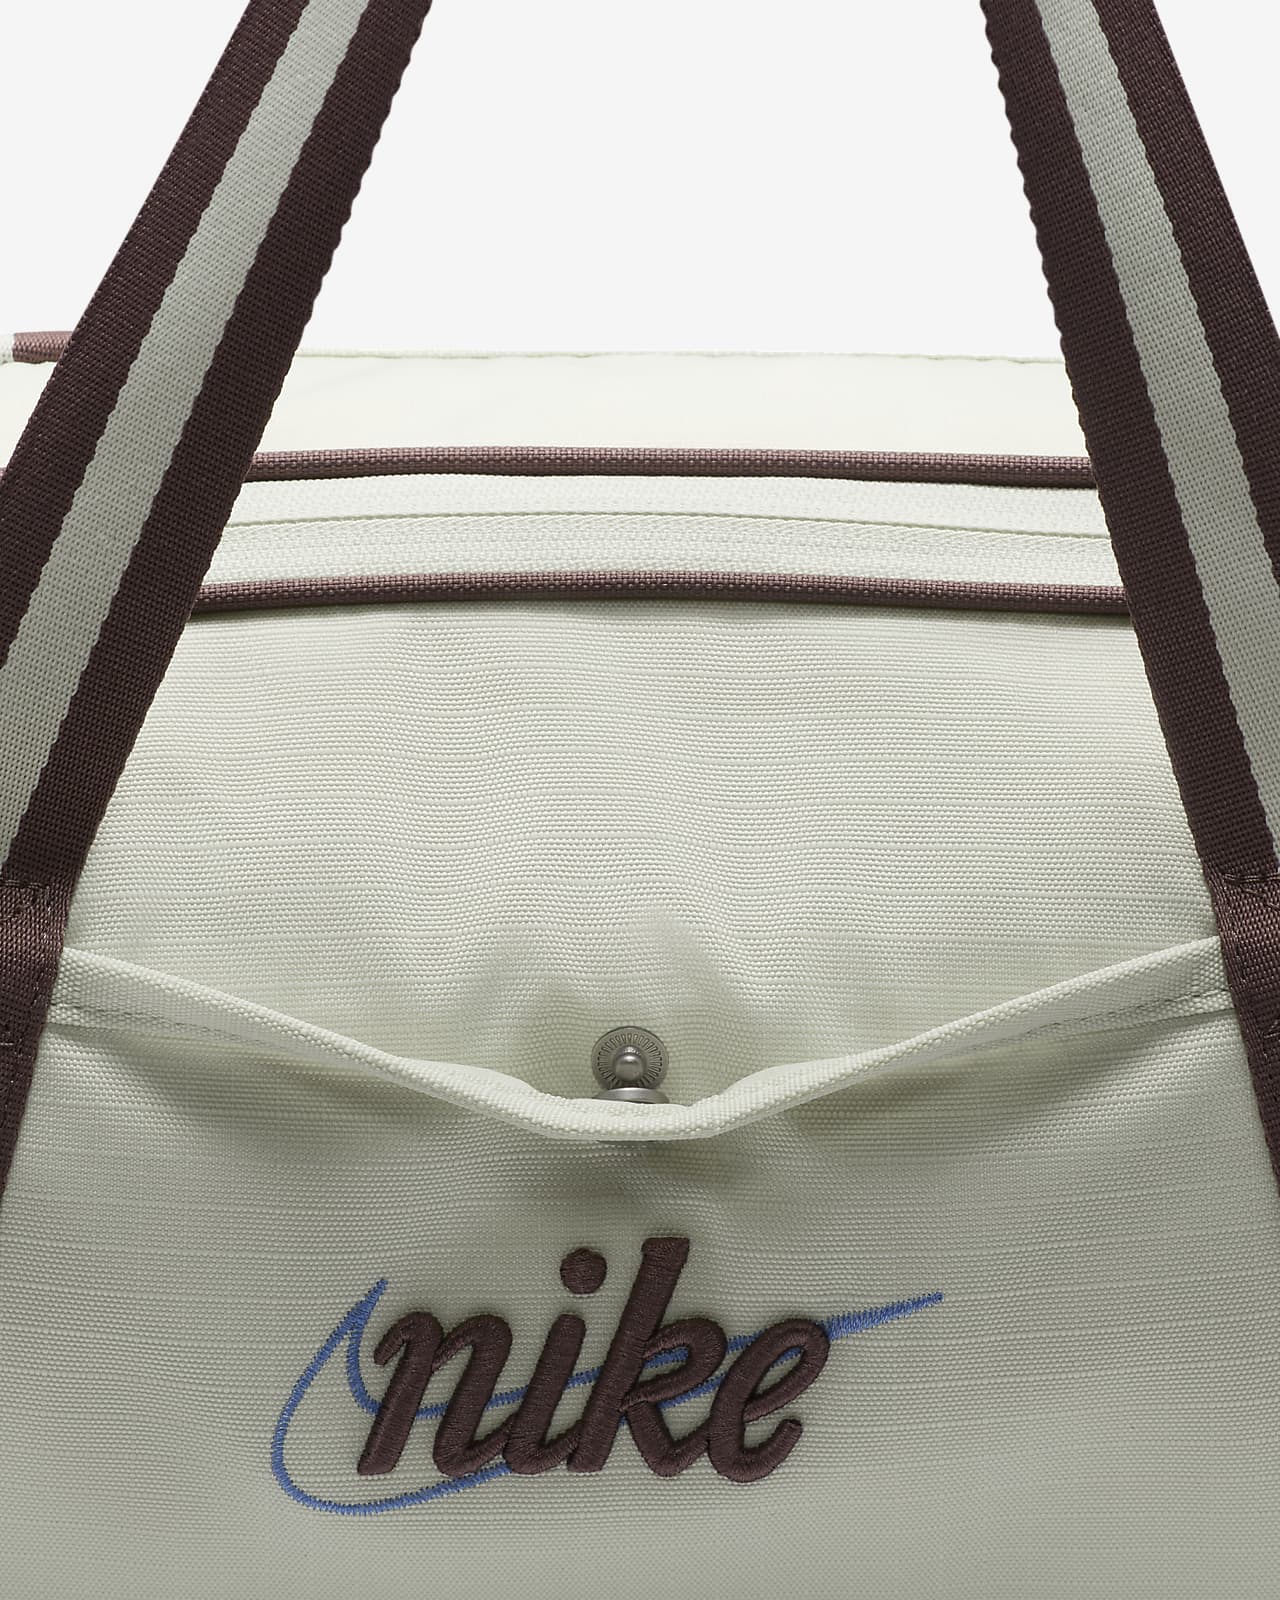 Nike, Bags, Nike Nearly Vintage Tote Bag Gym Bag